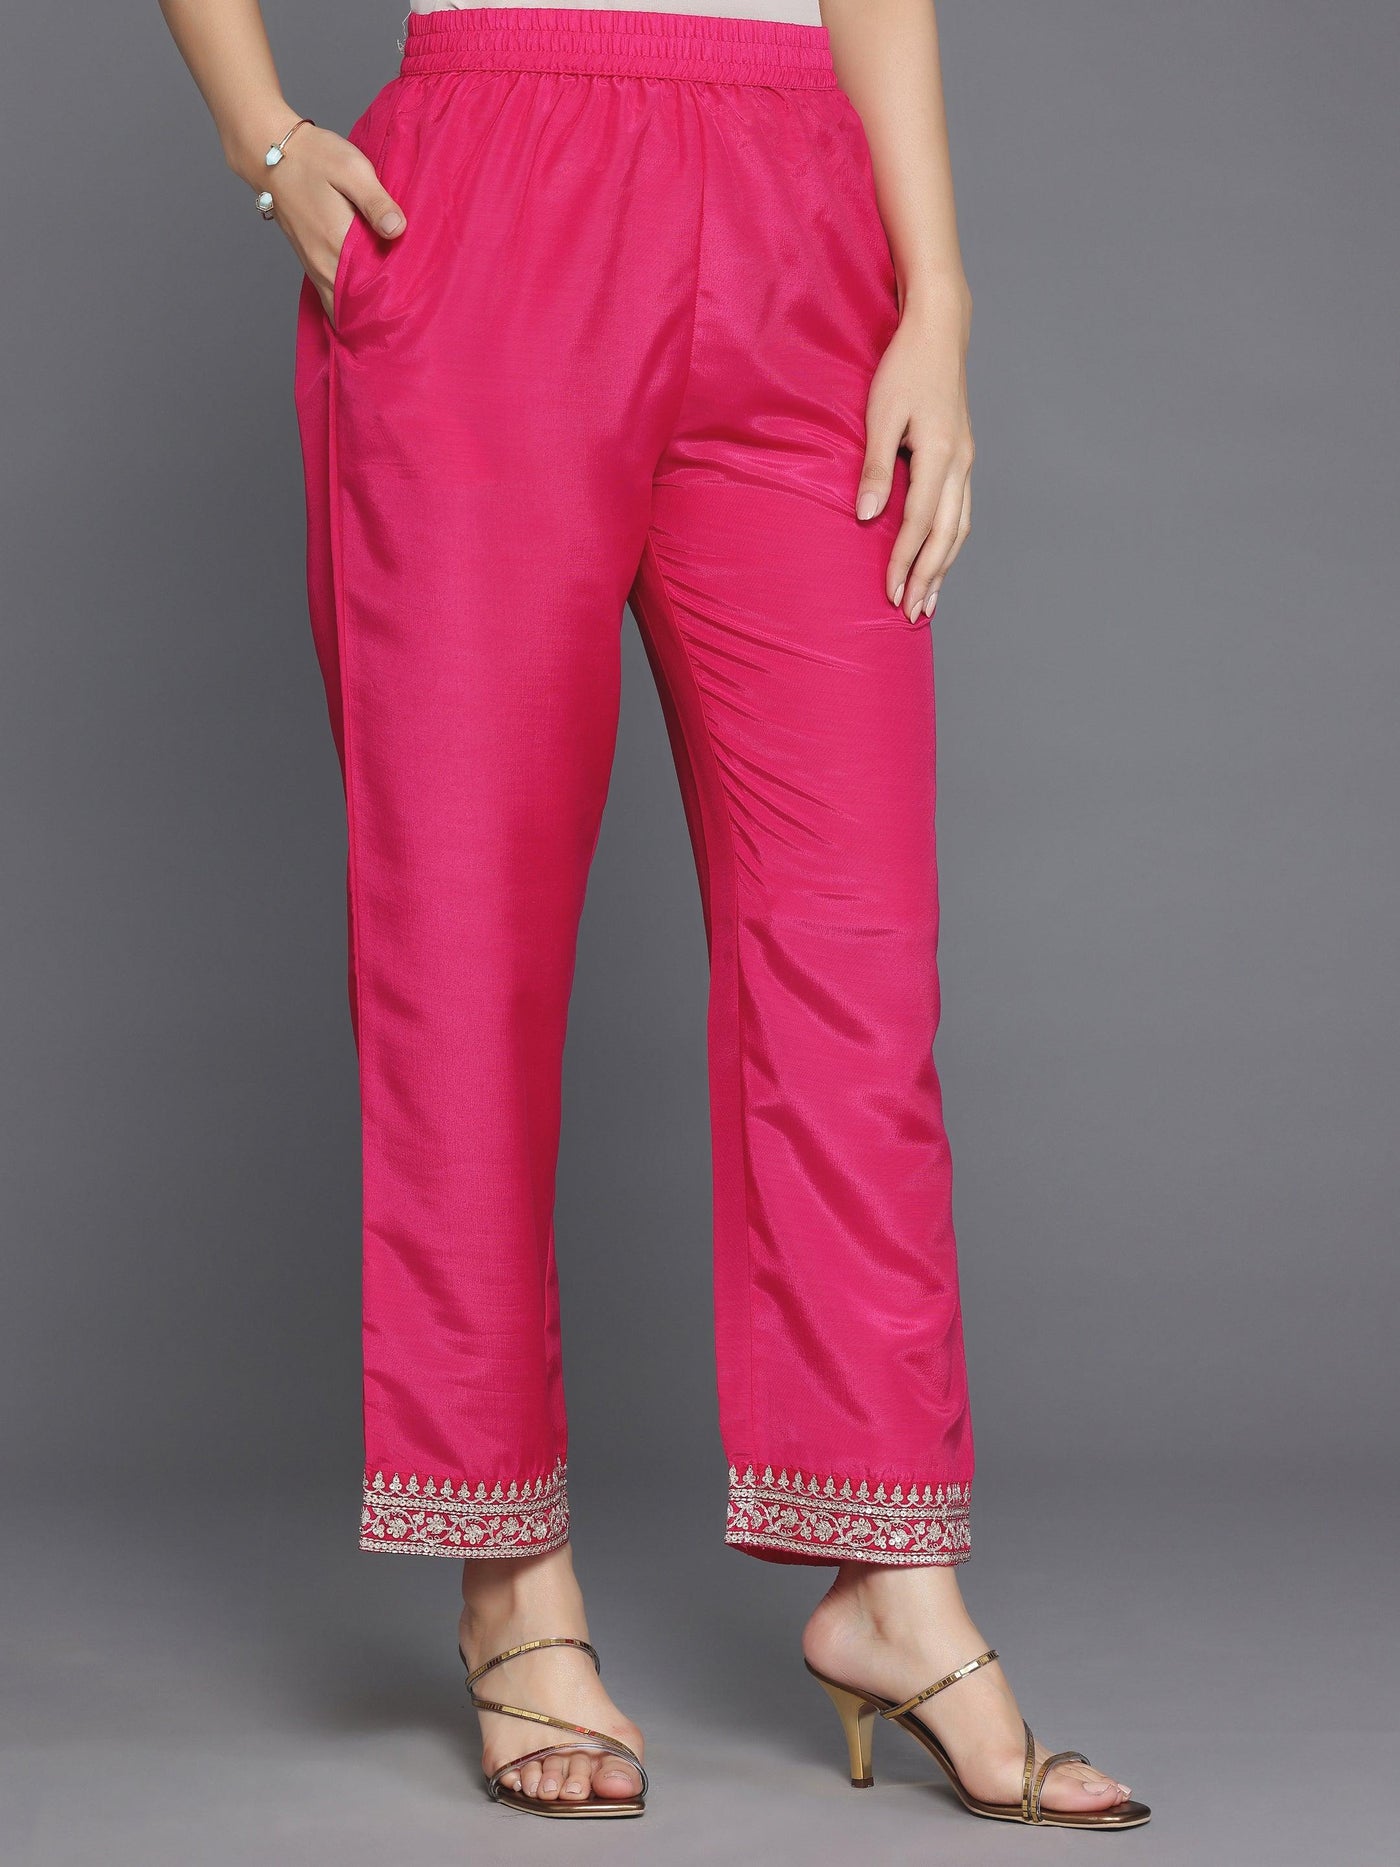 Pink Self Design Silk Blend Straight Suit With Dupatta - Libas